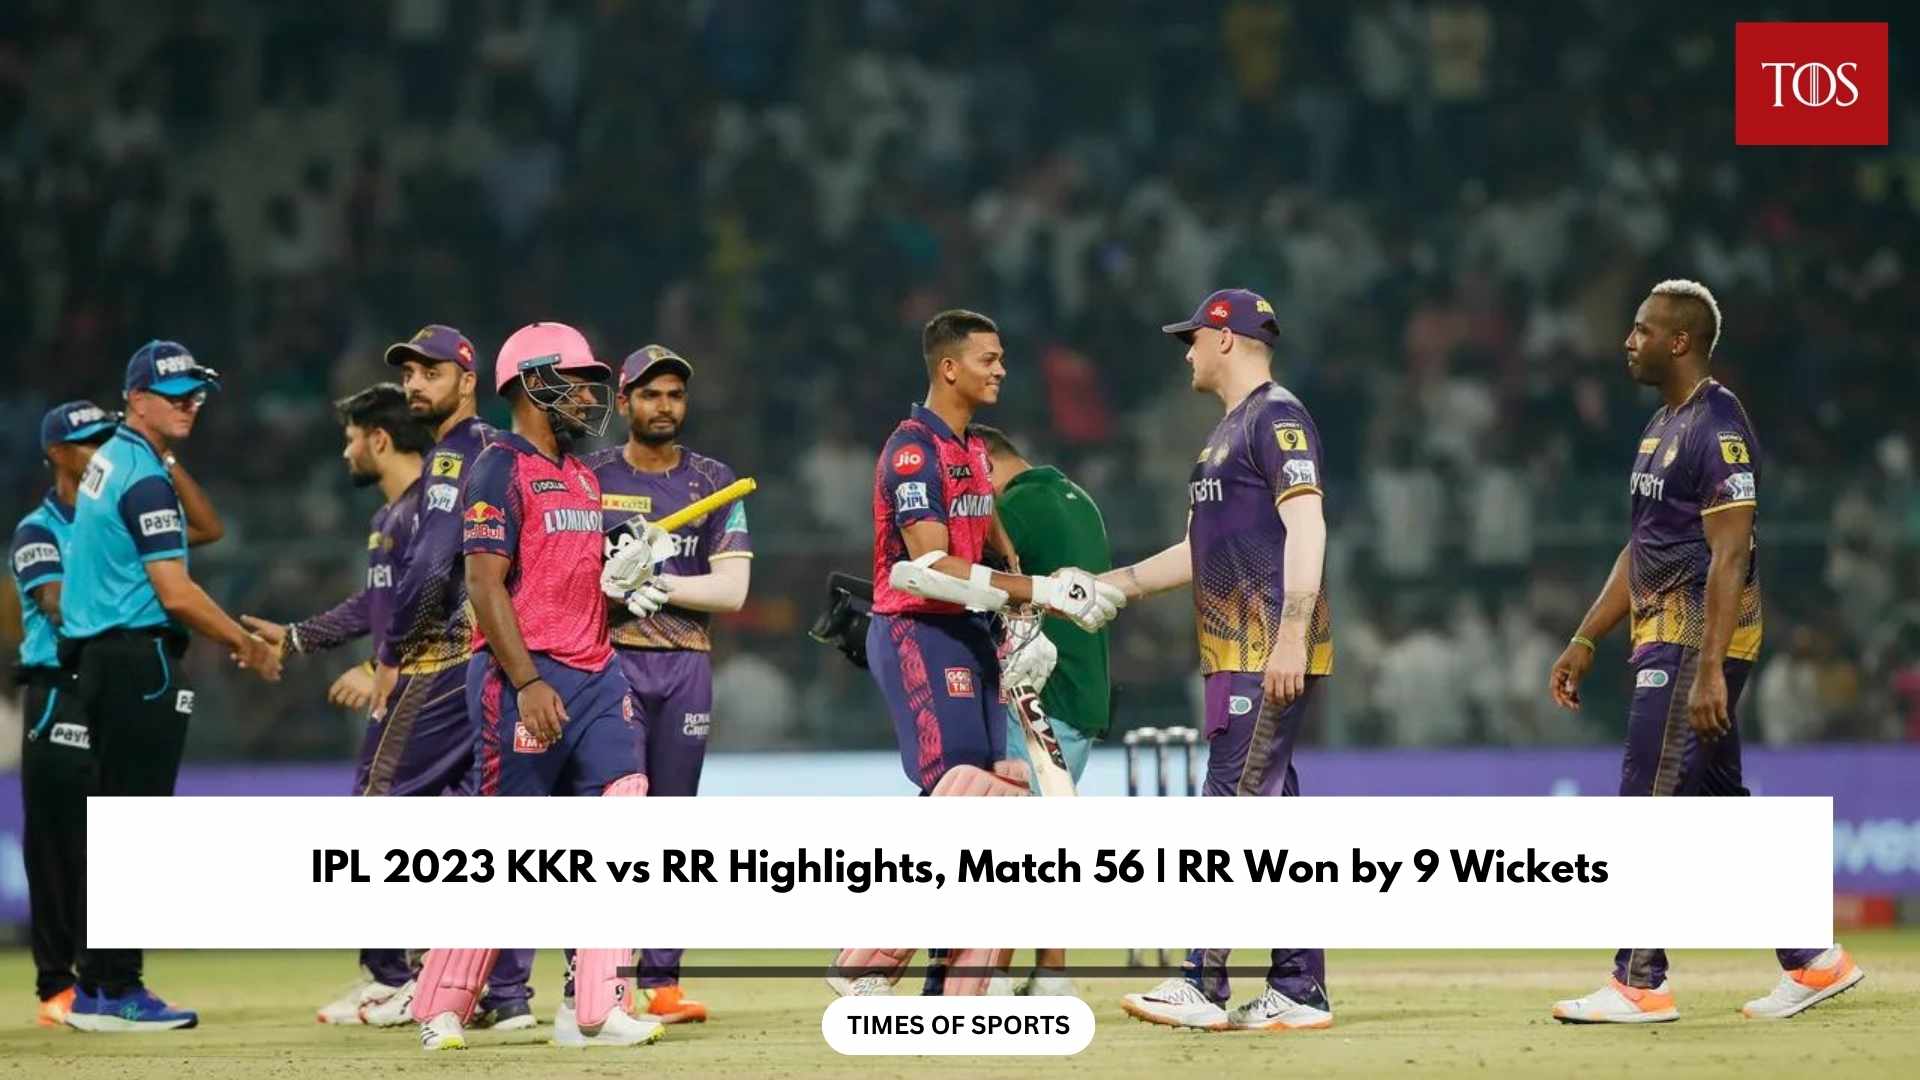 IPL 2023 KKR vs RR Highlights, Match 56 RR Won by 9 Wickets